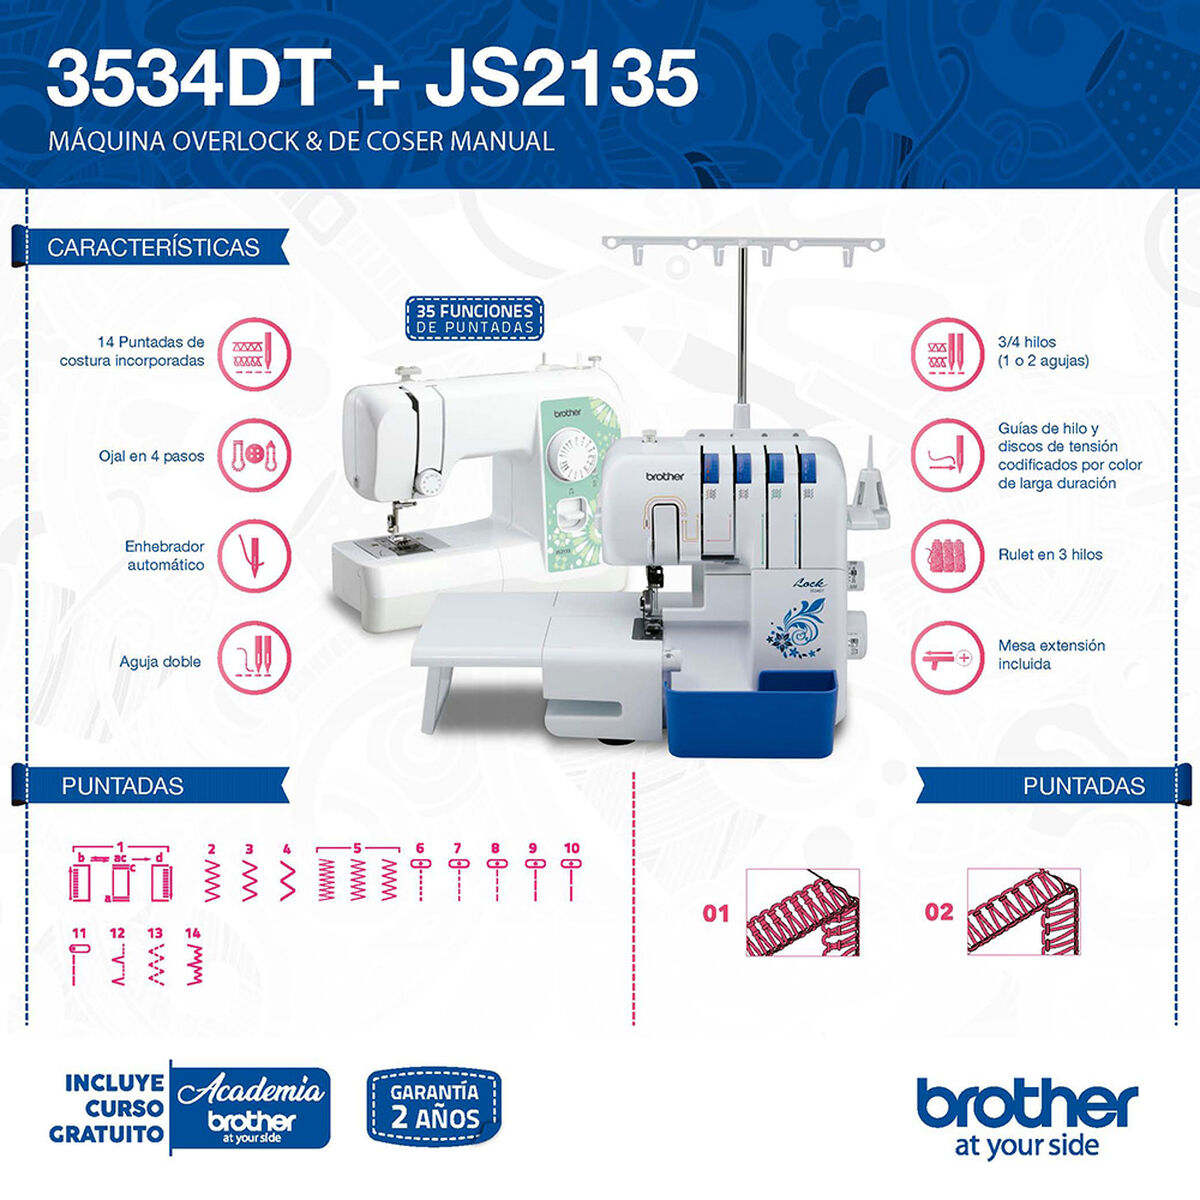 Máquina Overlock Brother 3534DT + Máquina de Coser y Remendar Brother JS2135